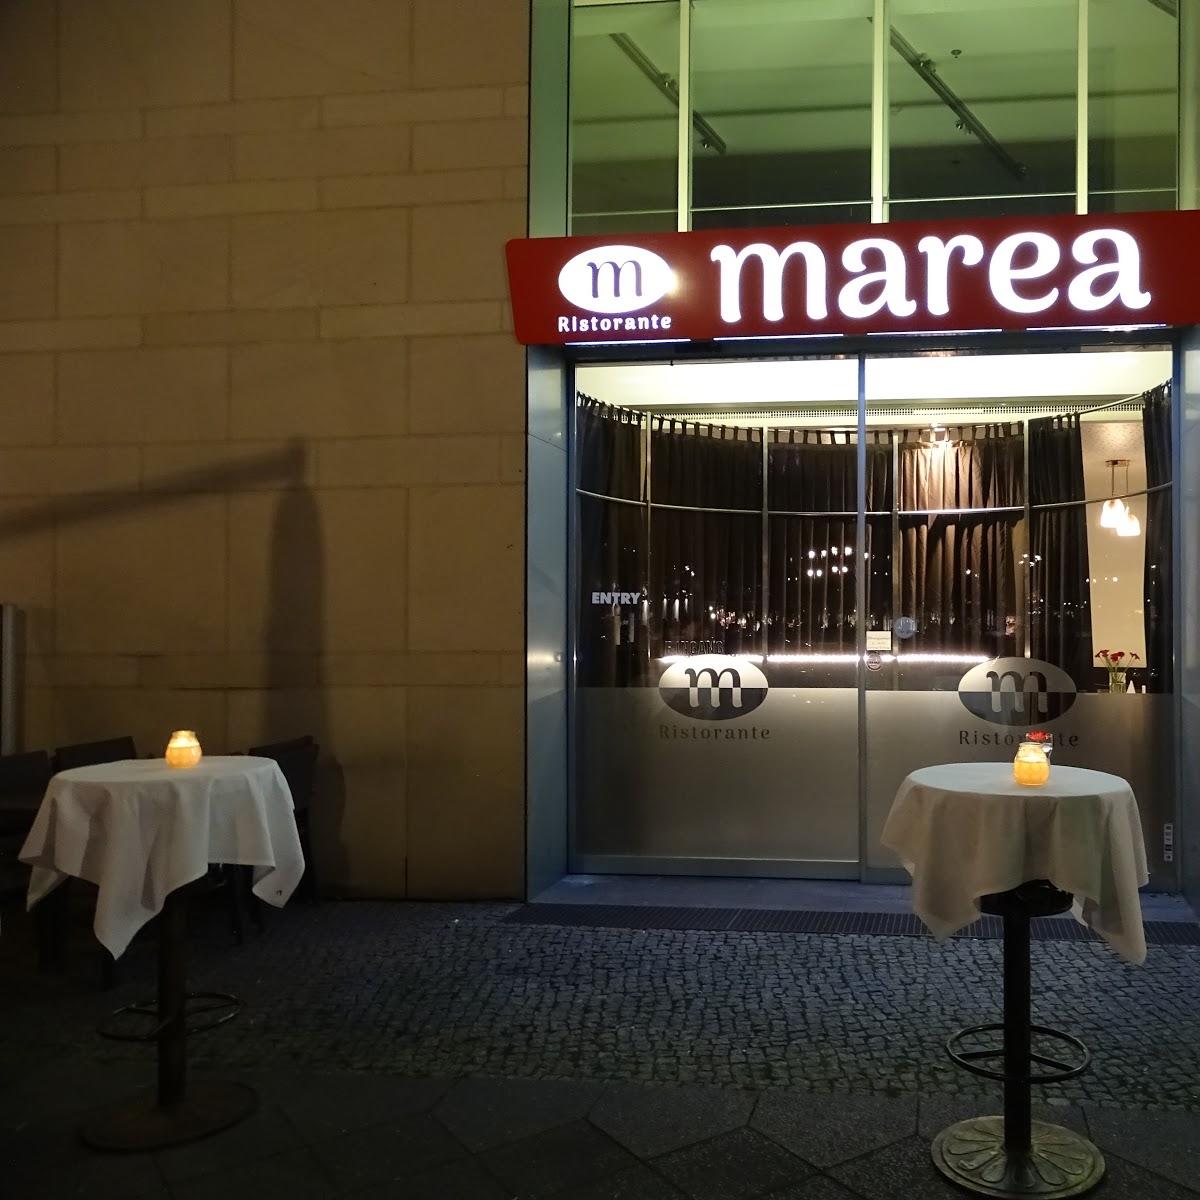 Restaurant "Ristorante Marea" in Berlin